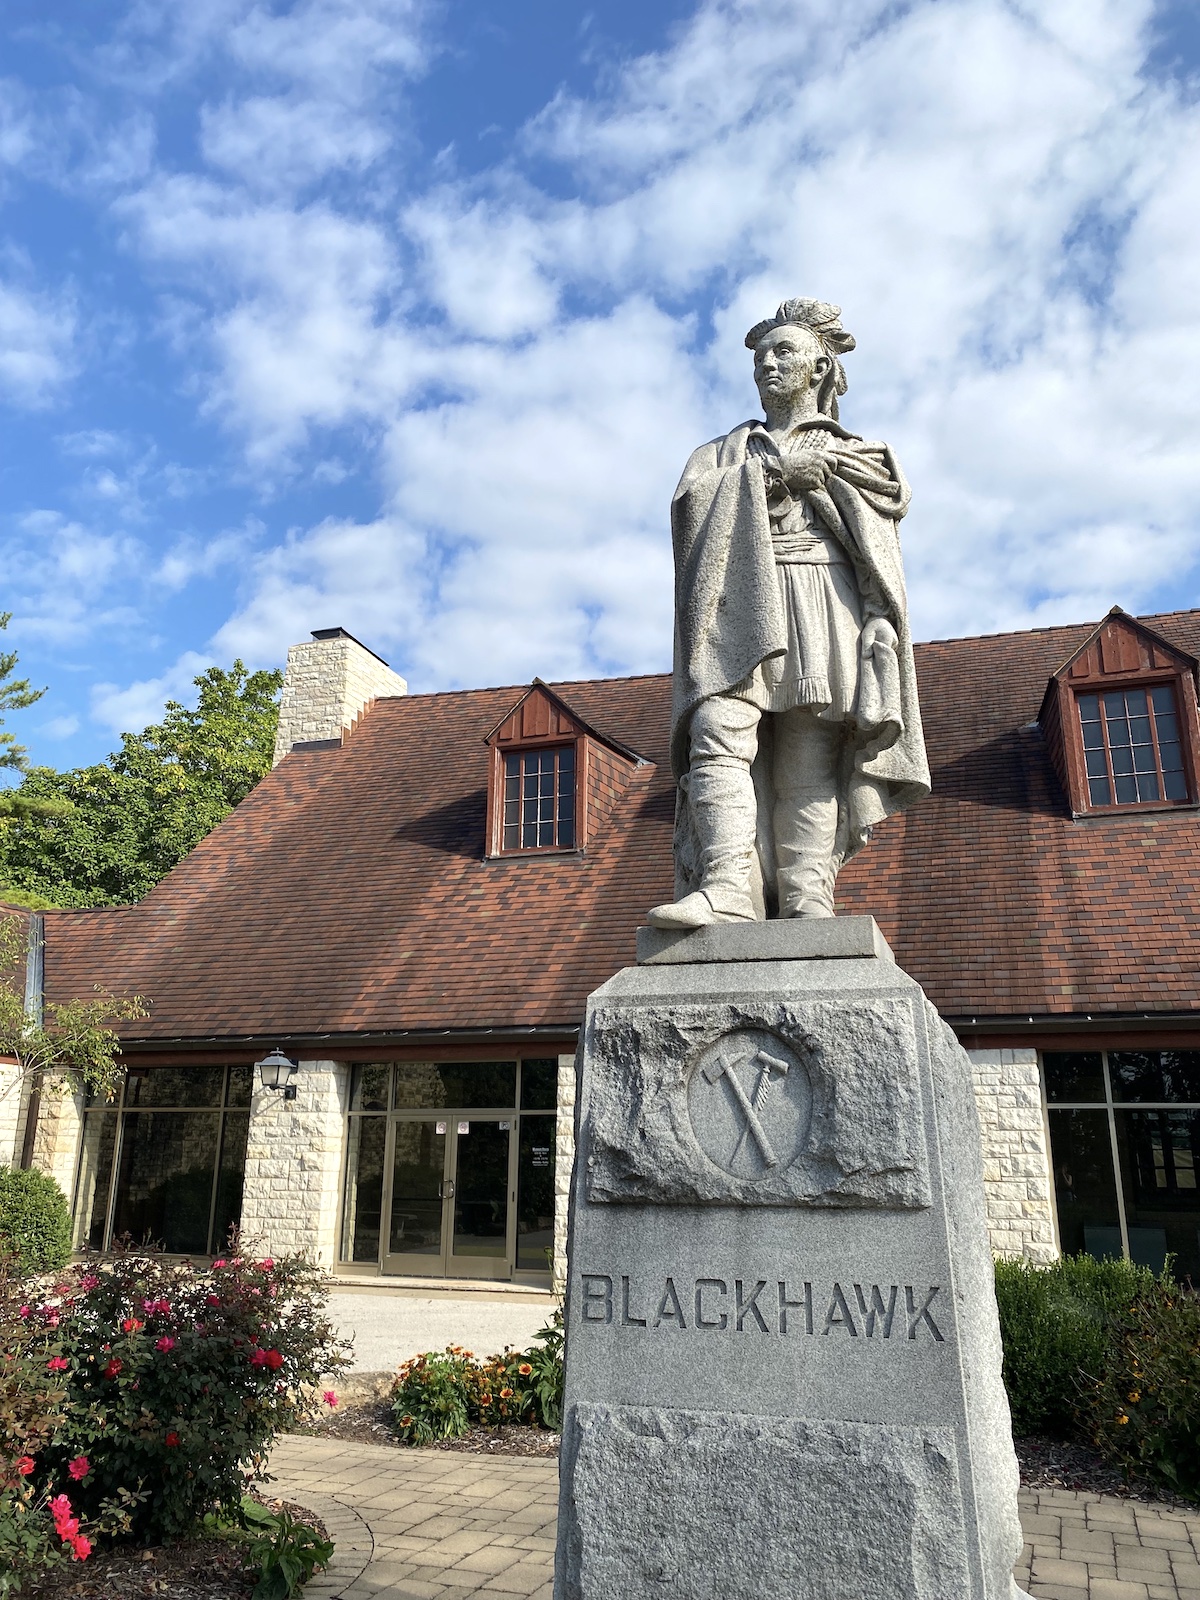 Statue of Chief Blackhawk at Blackhawk State Historic Site in Rock Island, Illinois